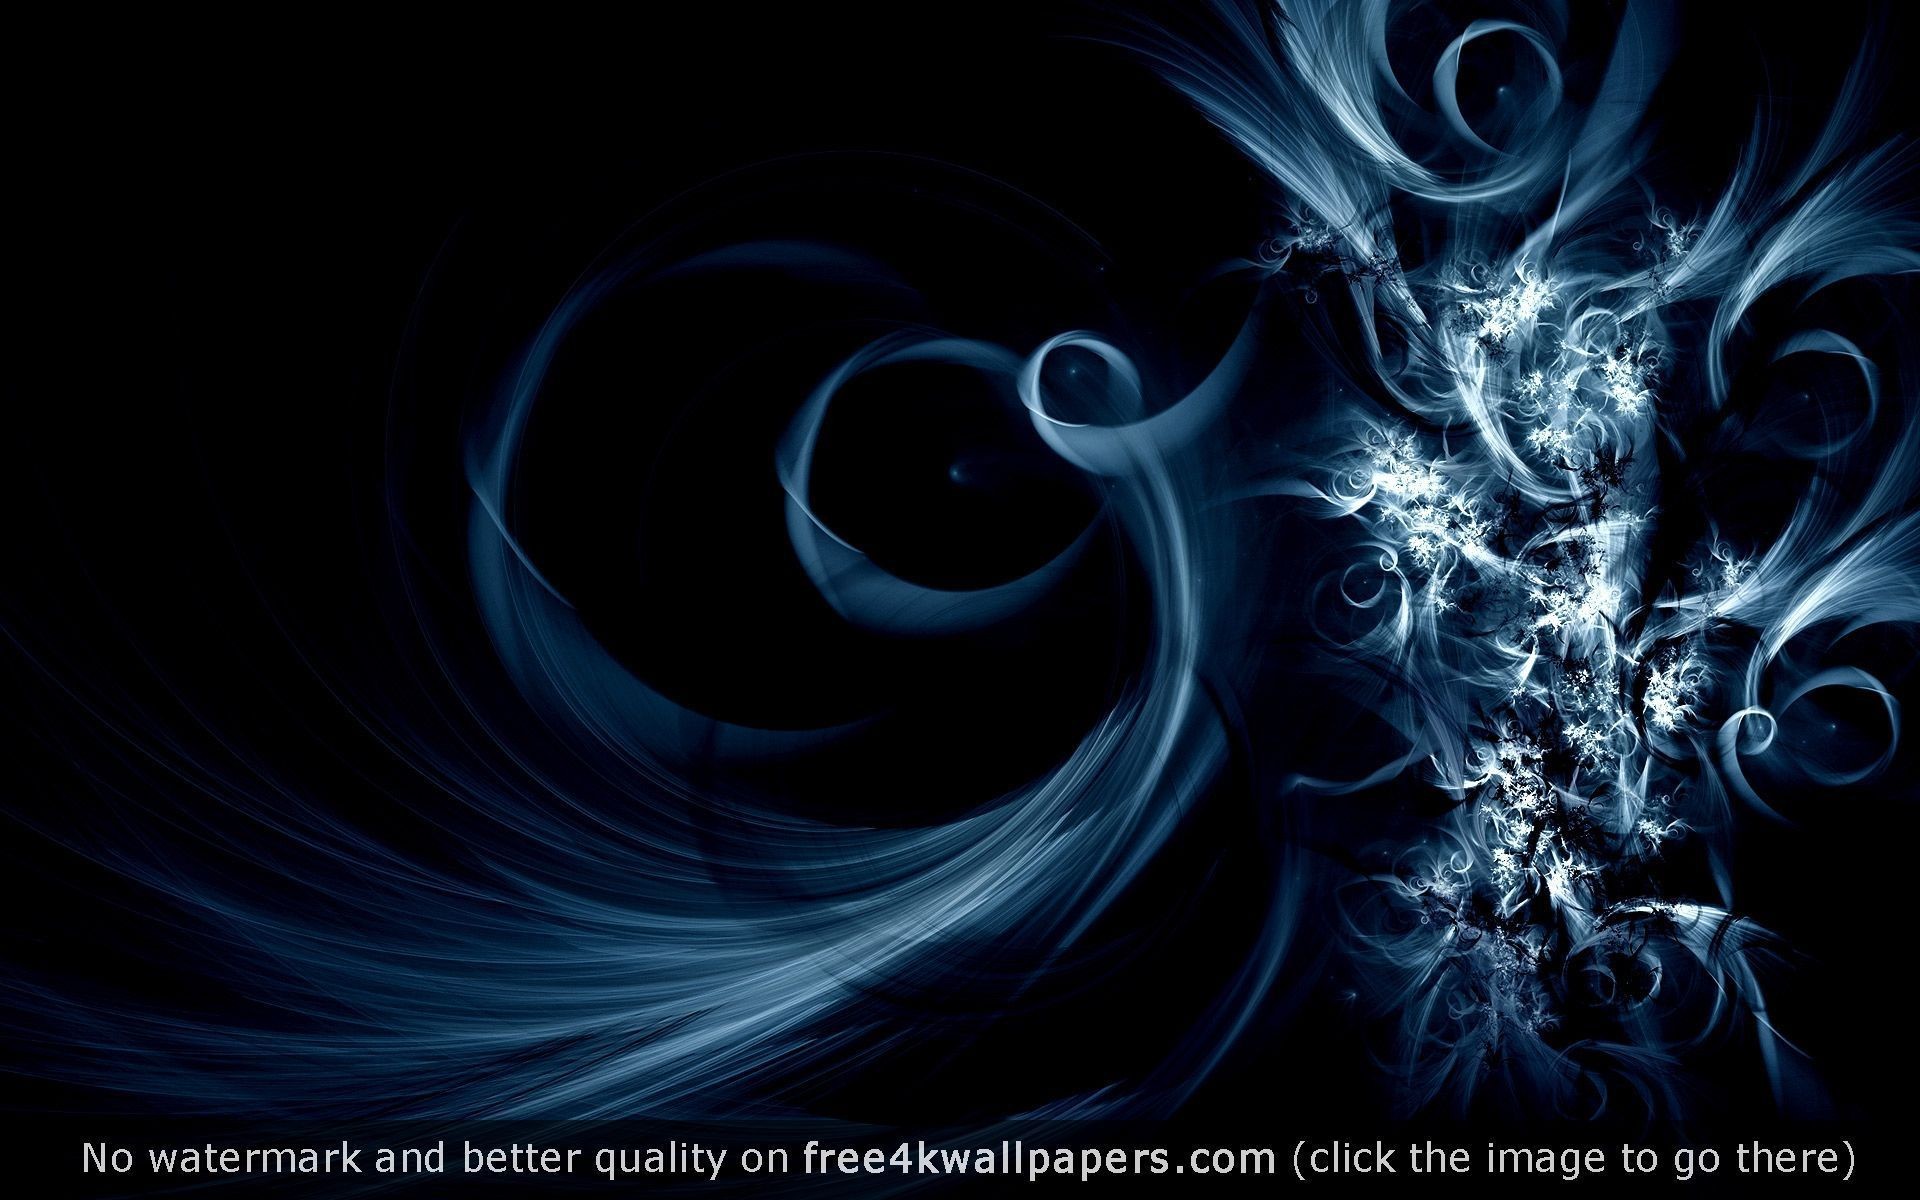 Background animated image shiki swirly blue wallpaper albums wallpapers abstract wallwuzz hd wallpaper jpg x desktop wallpaper 289965